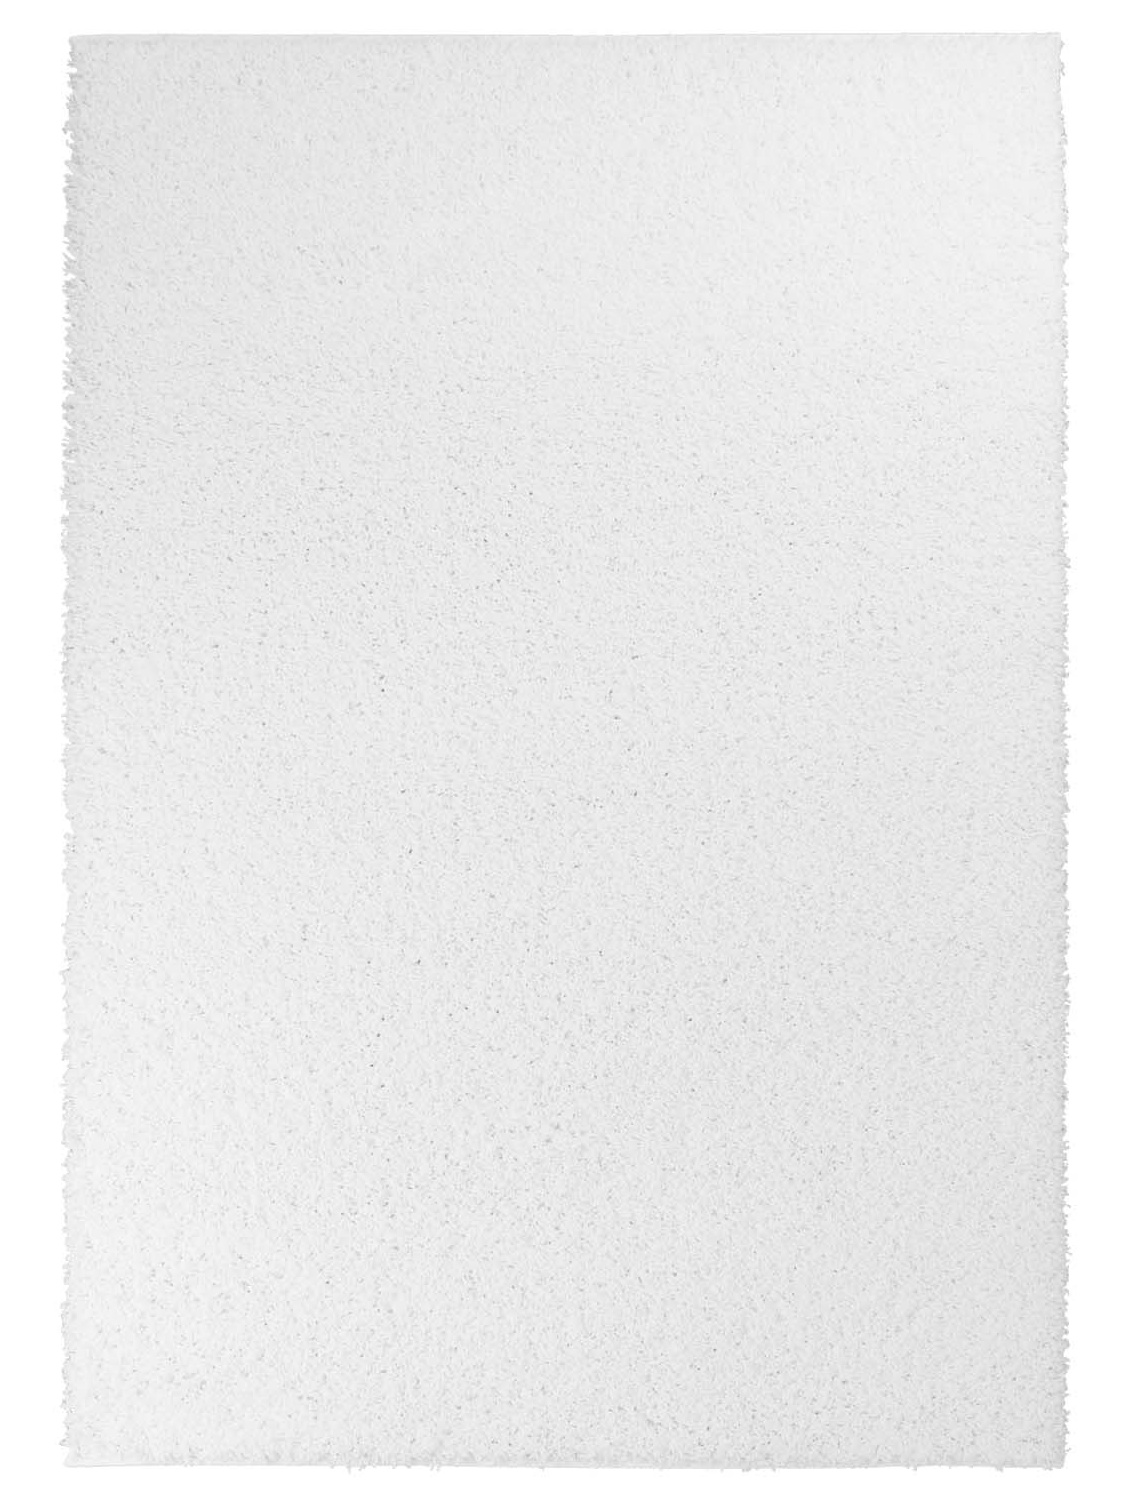 Trim hoogpolig vloerkleed wit tapijt rond 60x120 cm 80x 150 cm 140x200 cm 160x230 cm 200x300 cm